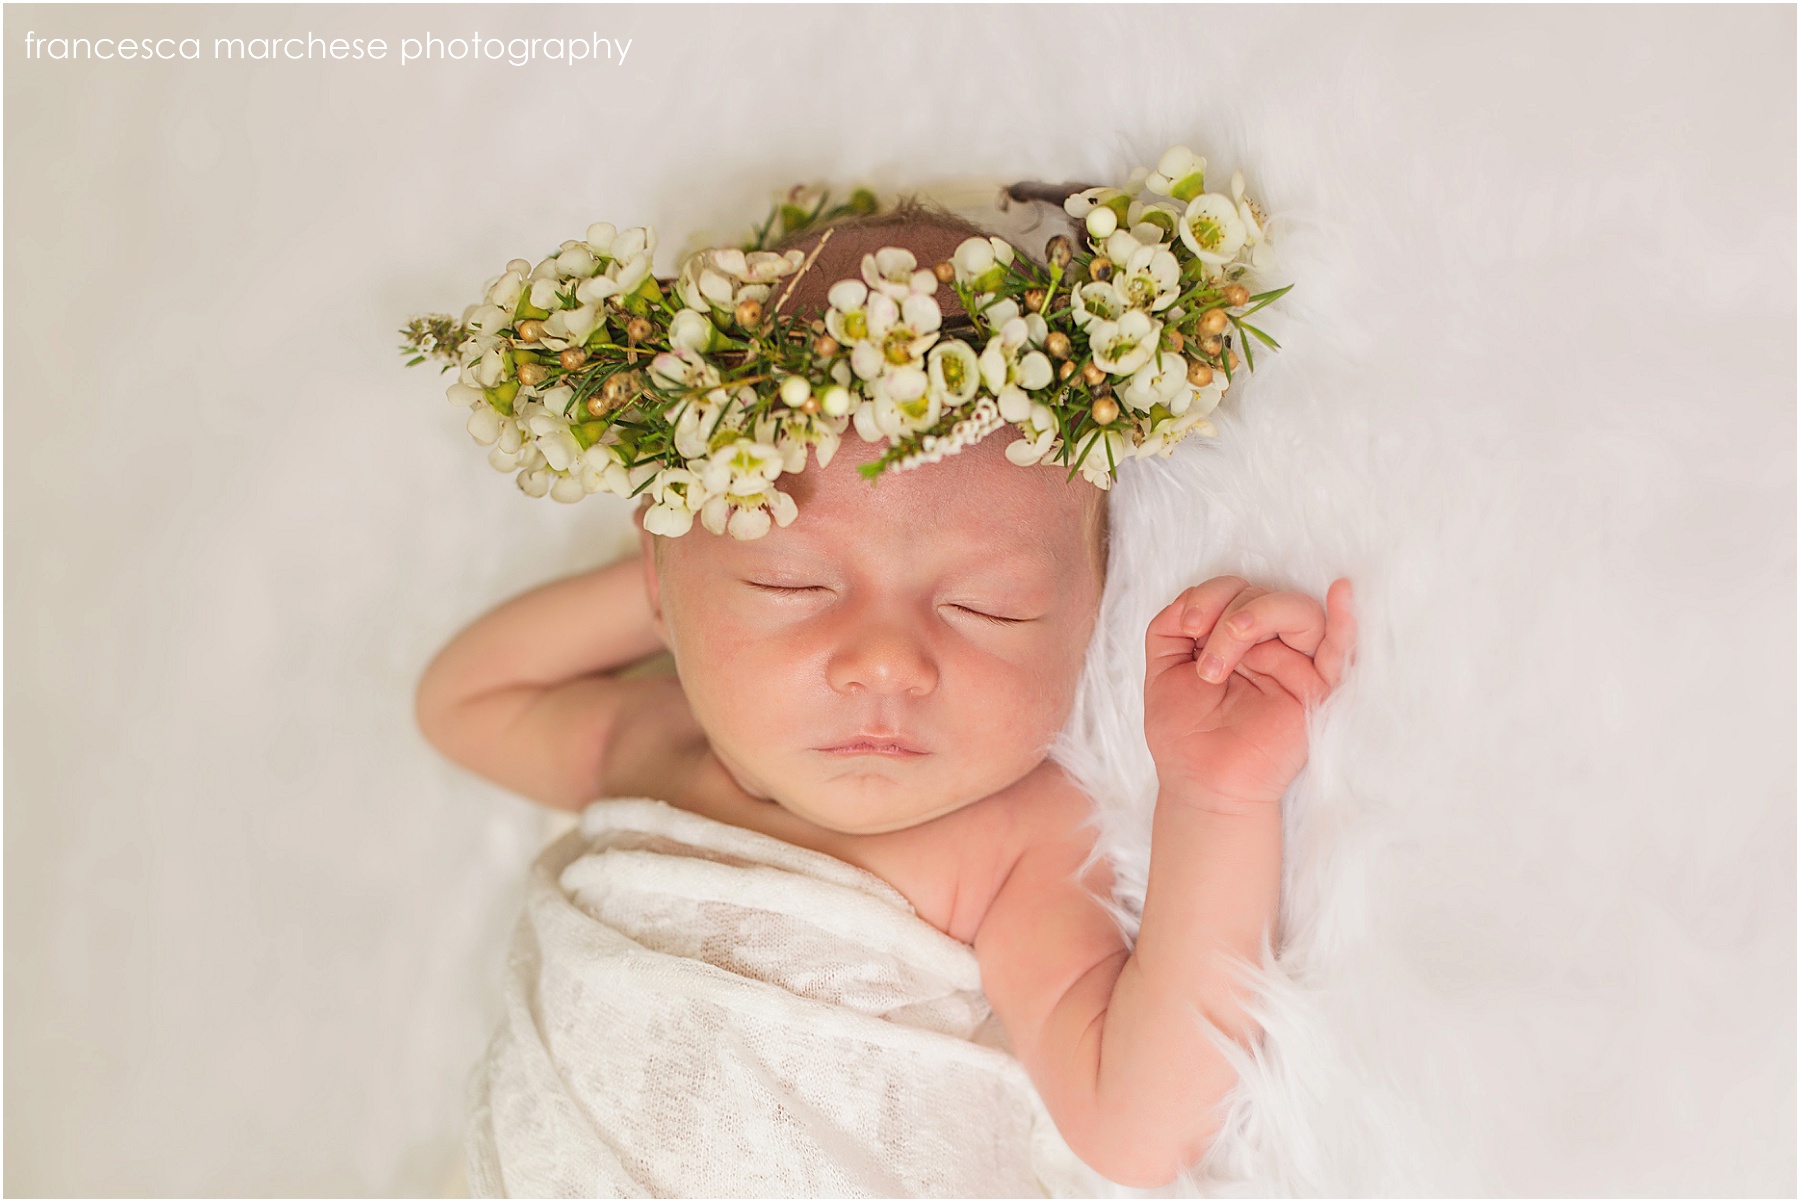 Francesca Marchese Photography - Newborn Photographer Long Beach, California (3)